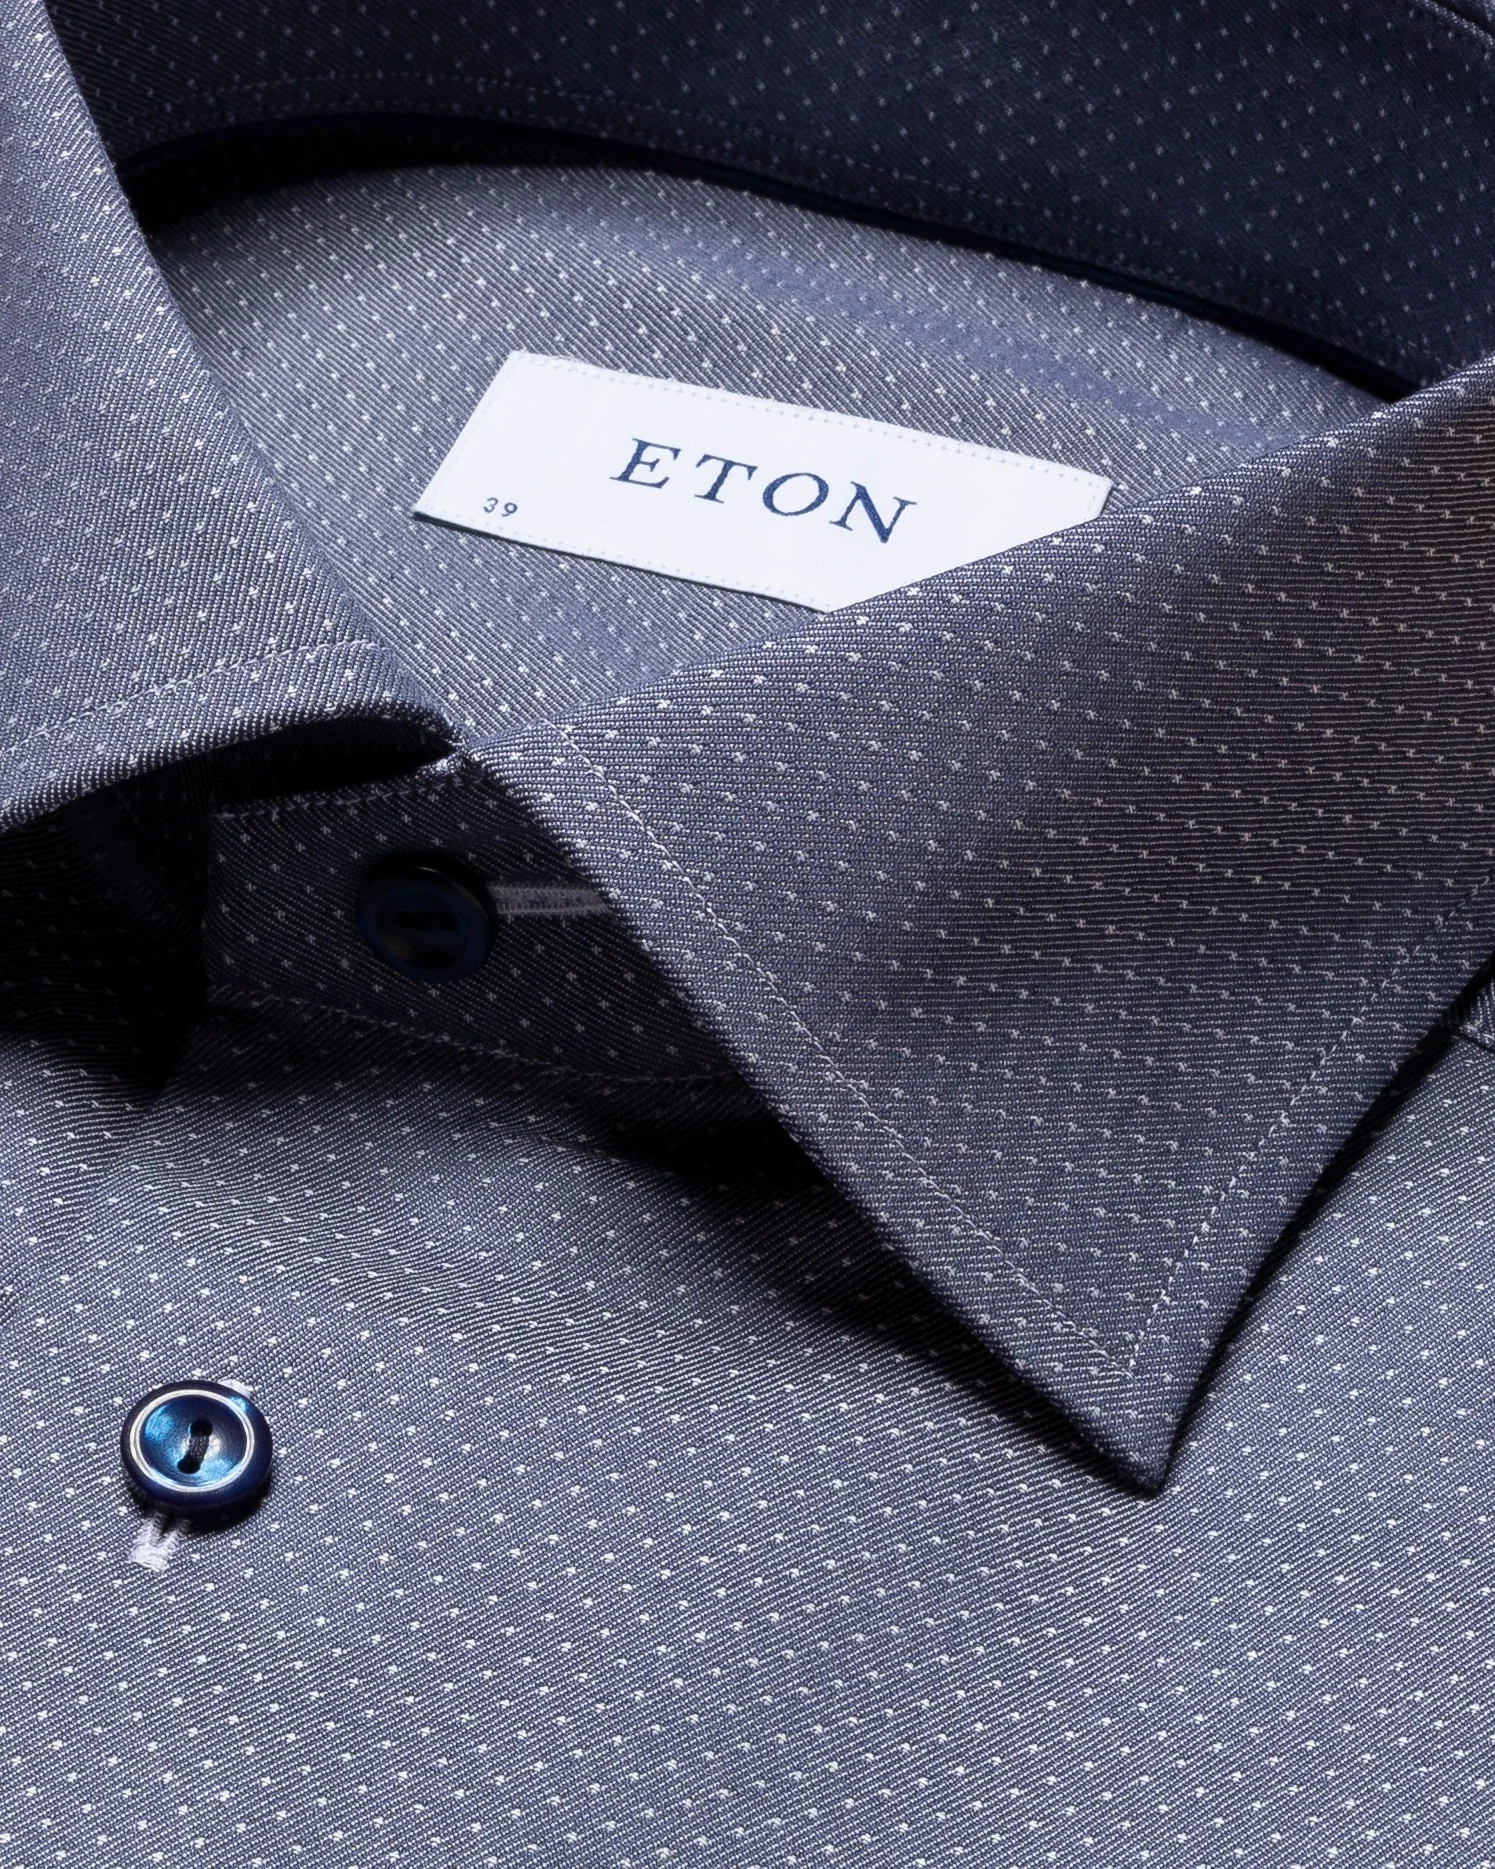 Eton - navy blue pin dot cotton lyocell stretch shirt